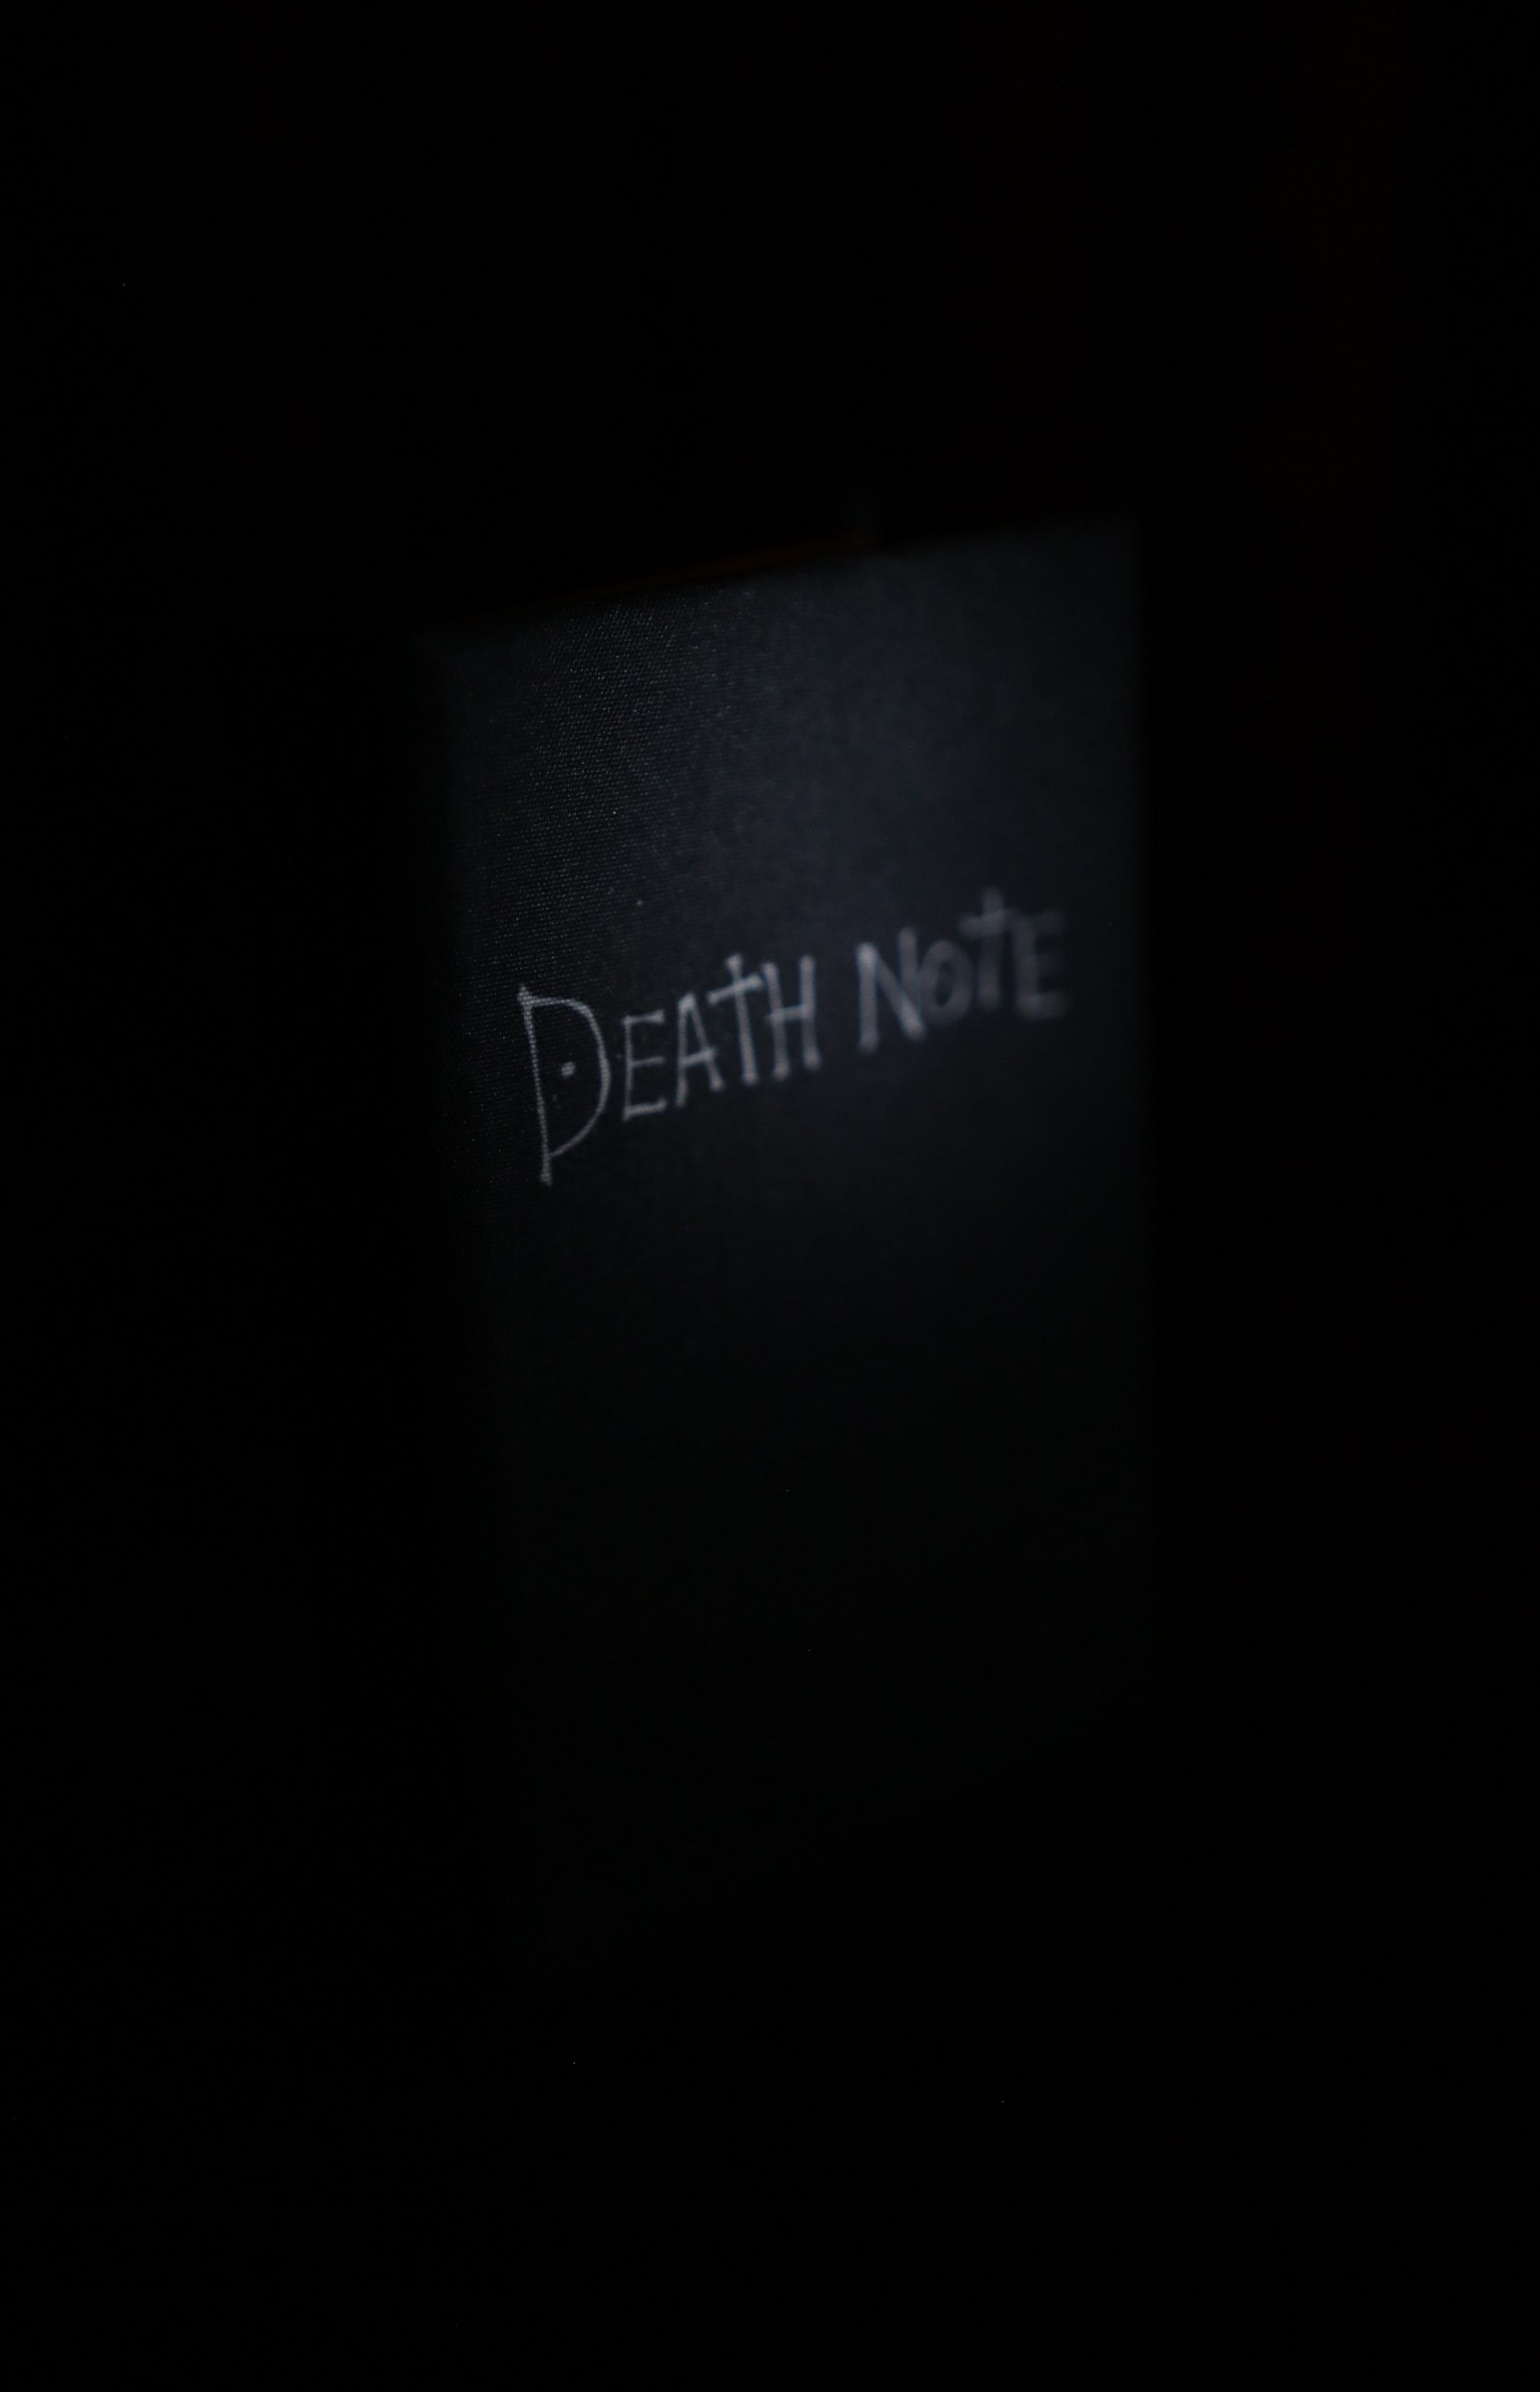 Death Note by Tsugumi Ohba 2007 Book Wallet